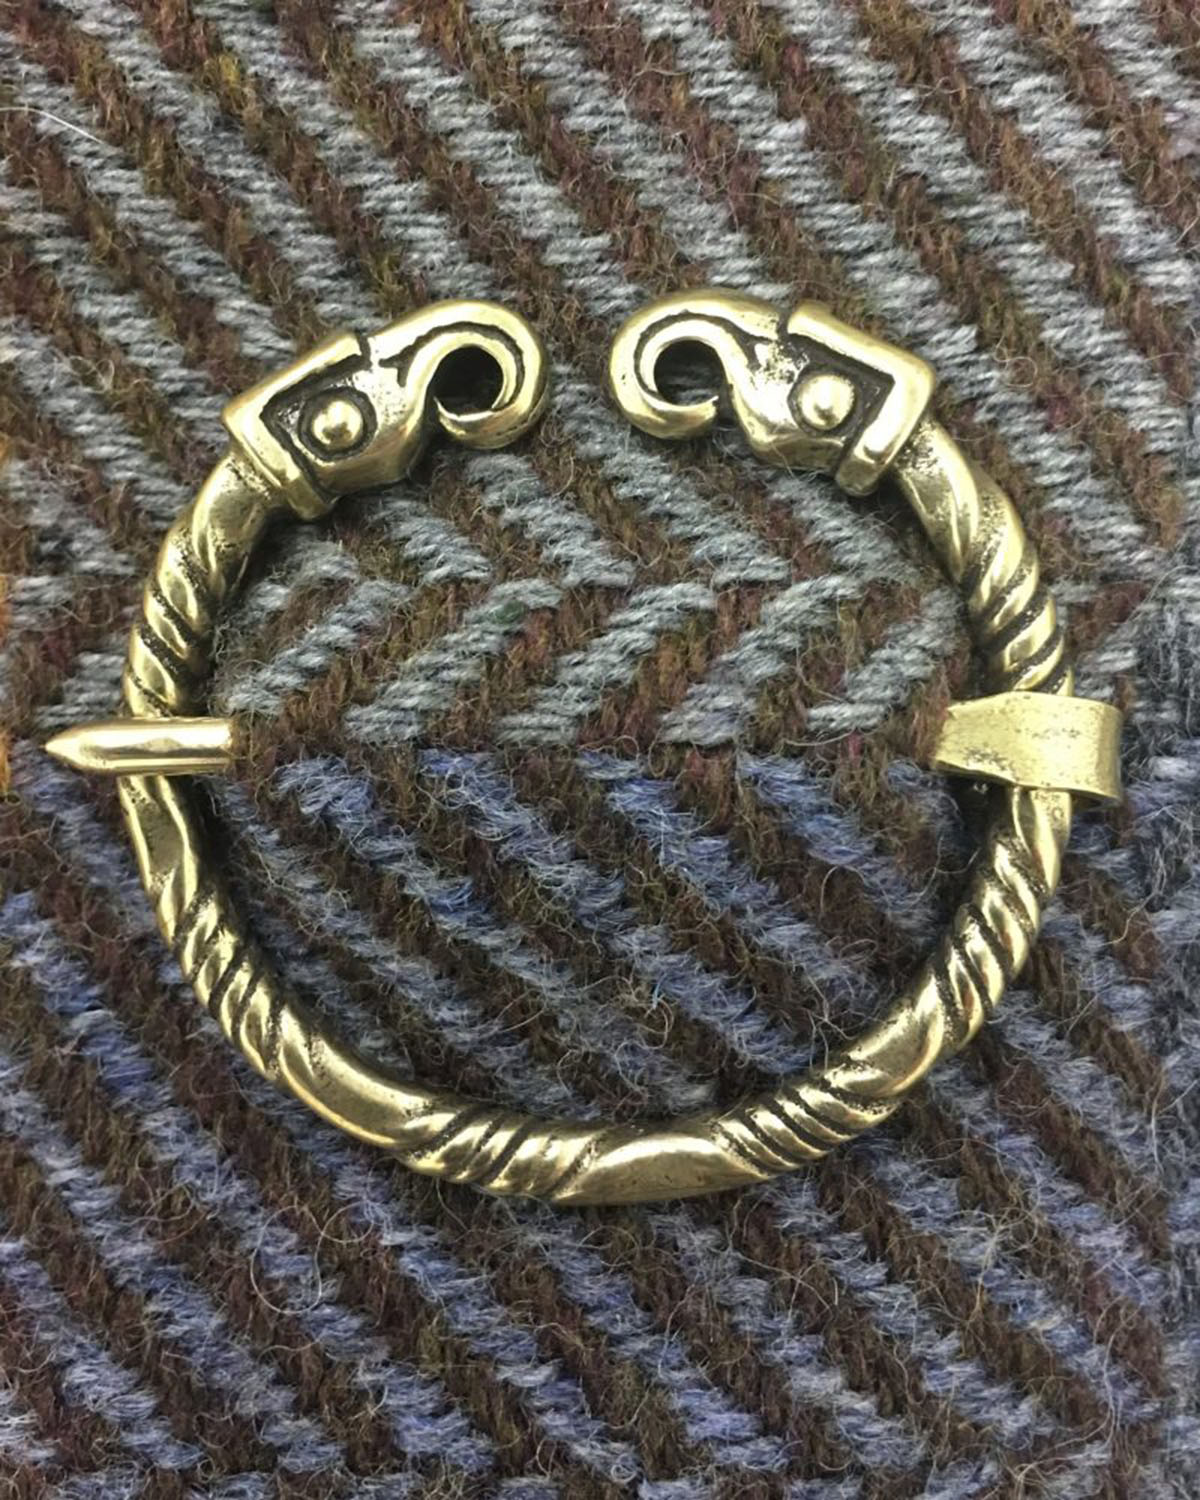 A brass bracelet with two hooks on it.